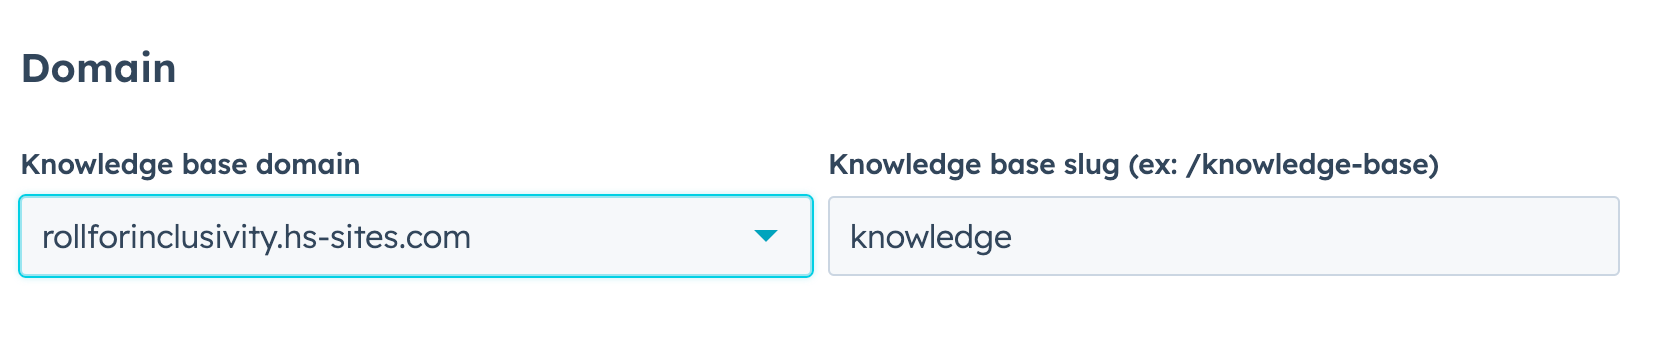 set-knowledge-base-domain